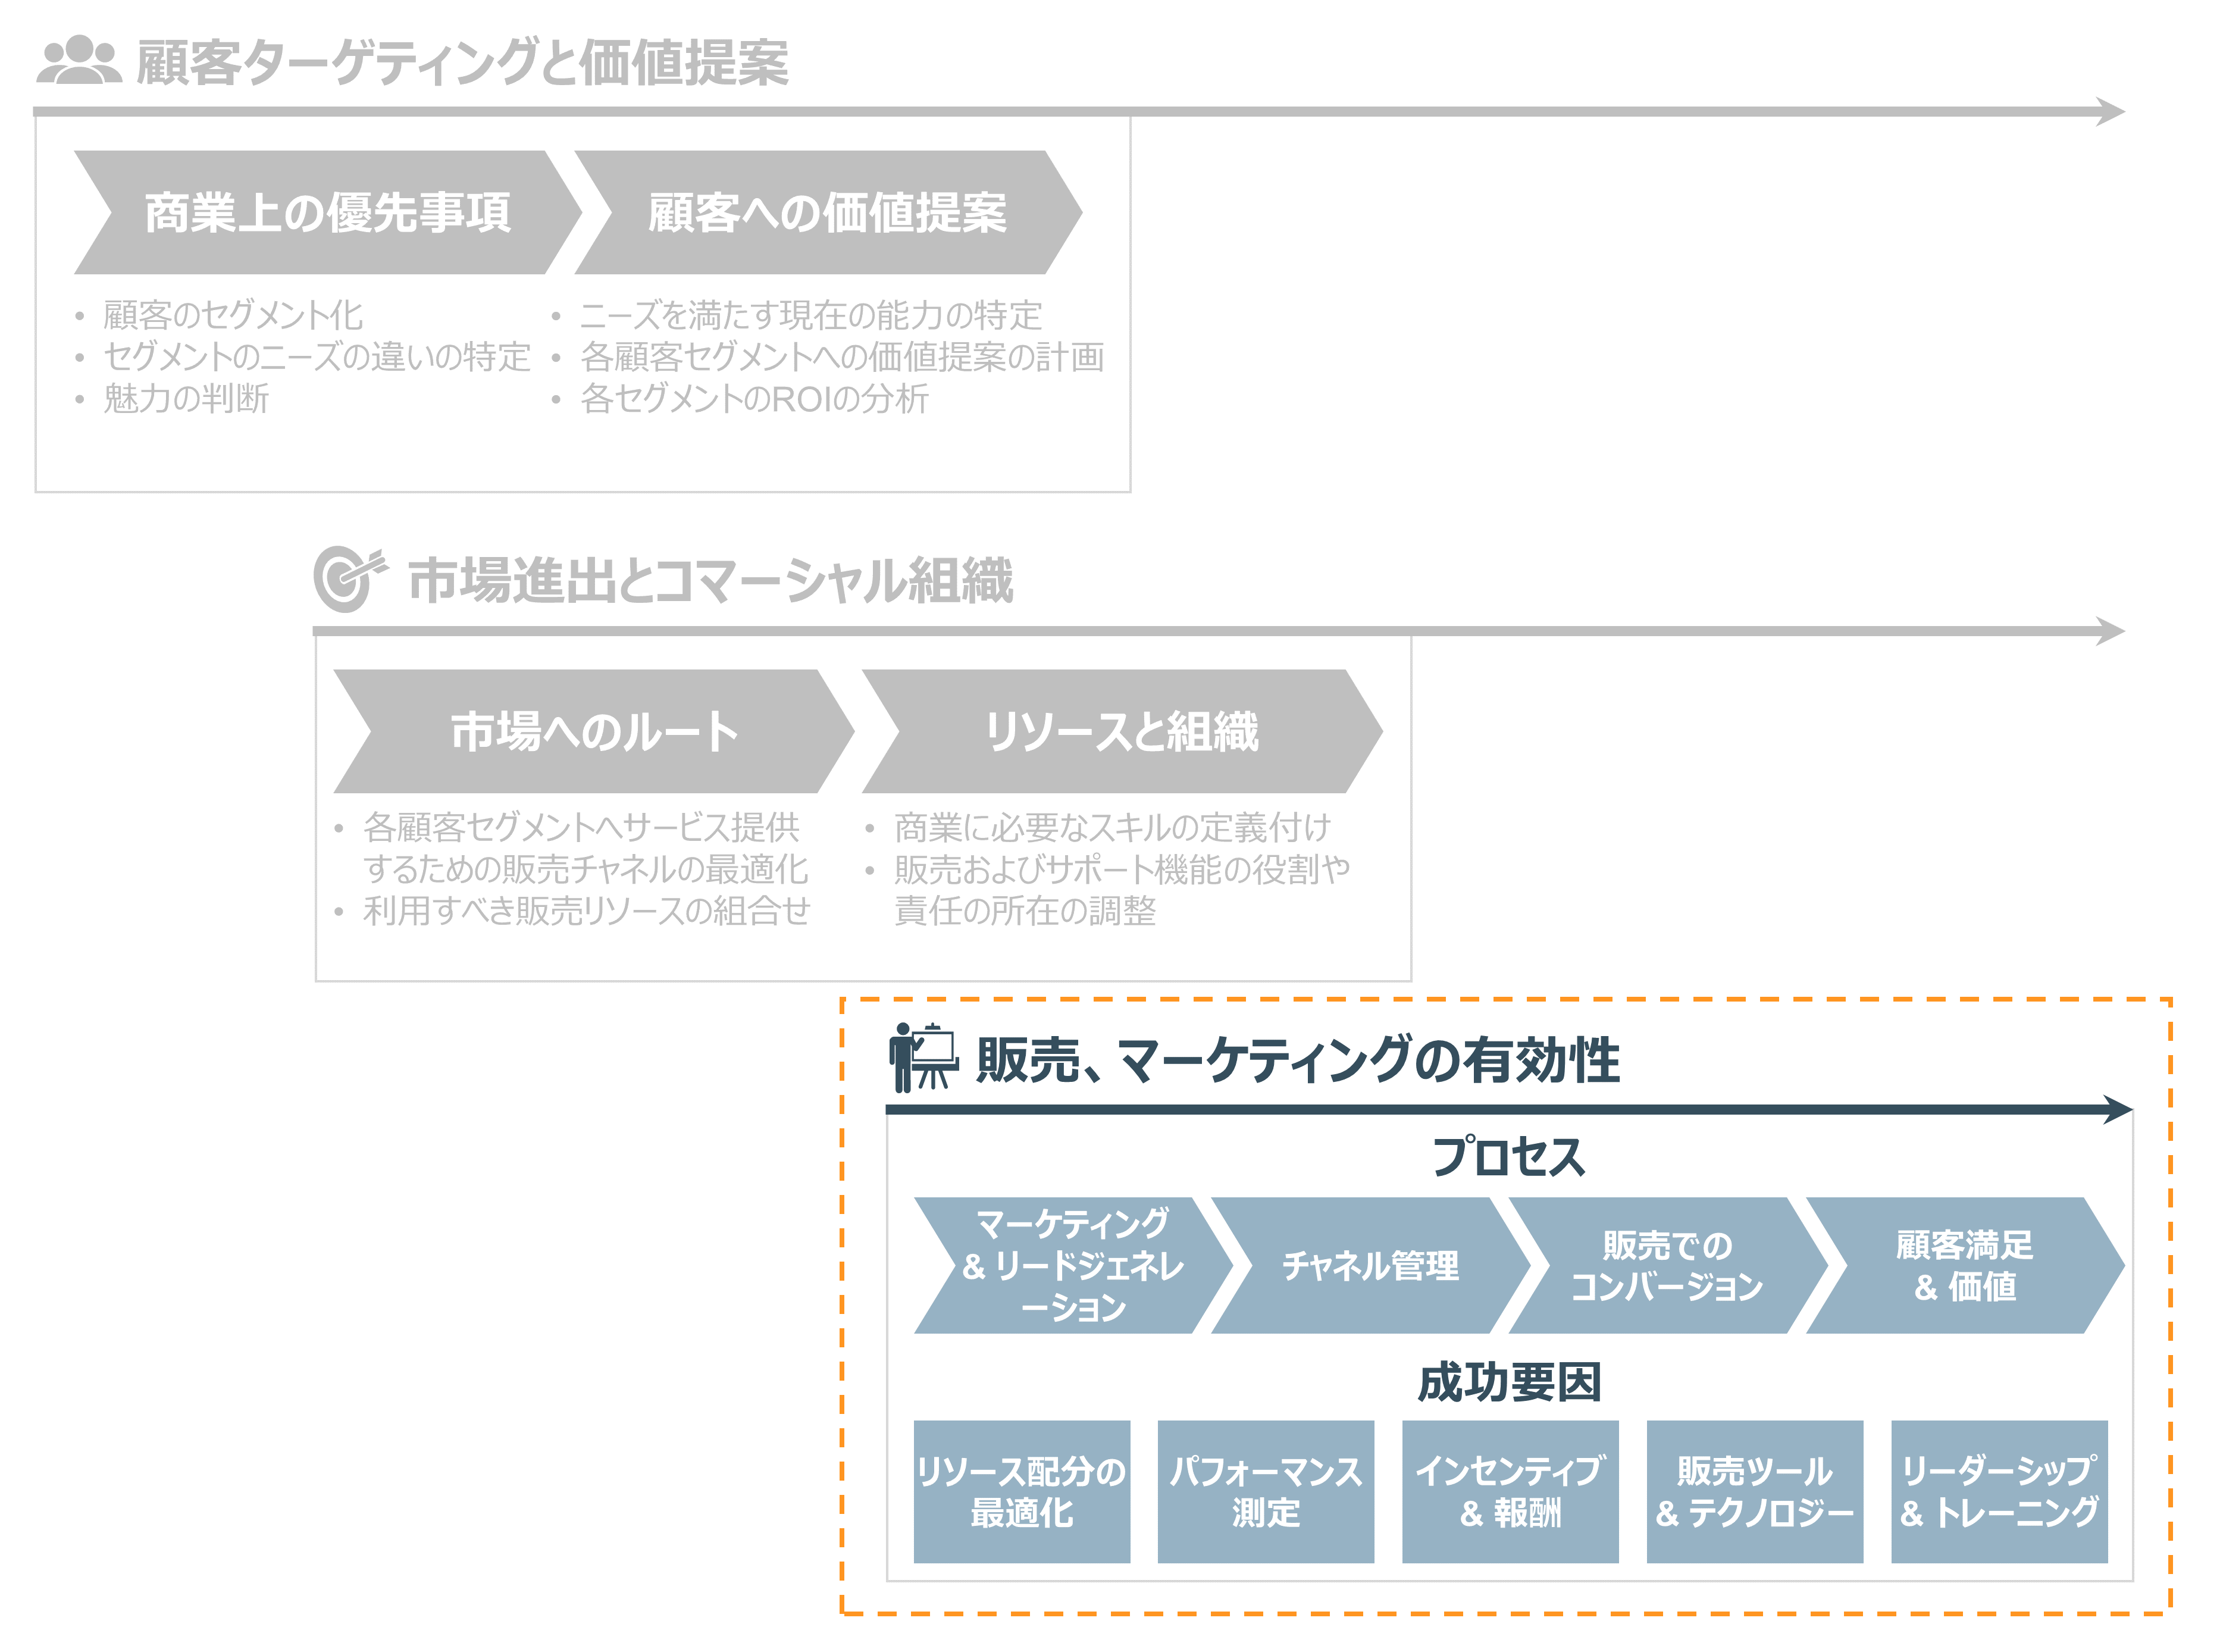 Sales-force-effectiveness-jp.PNG